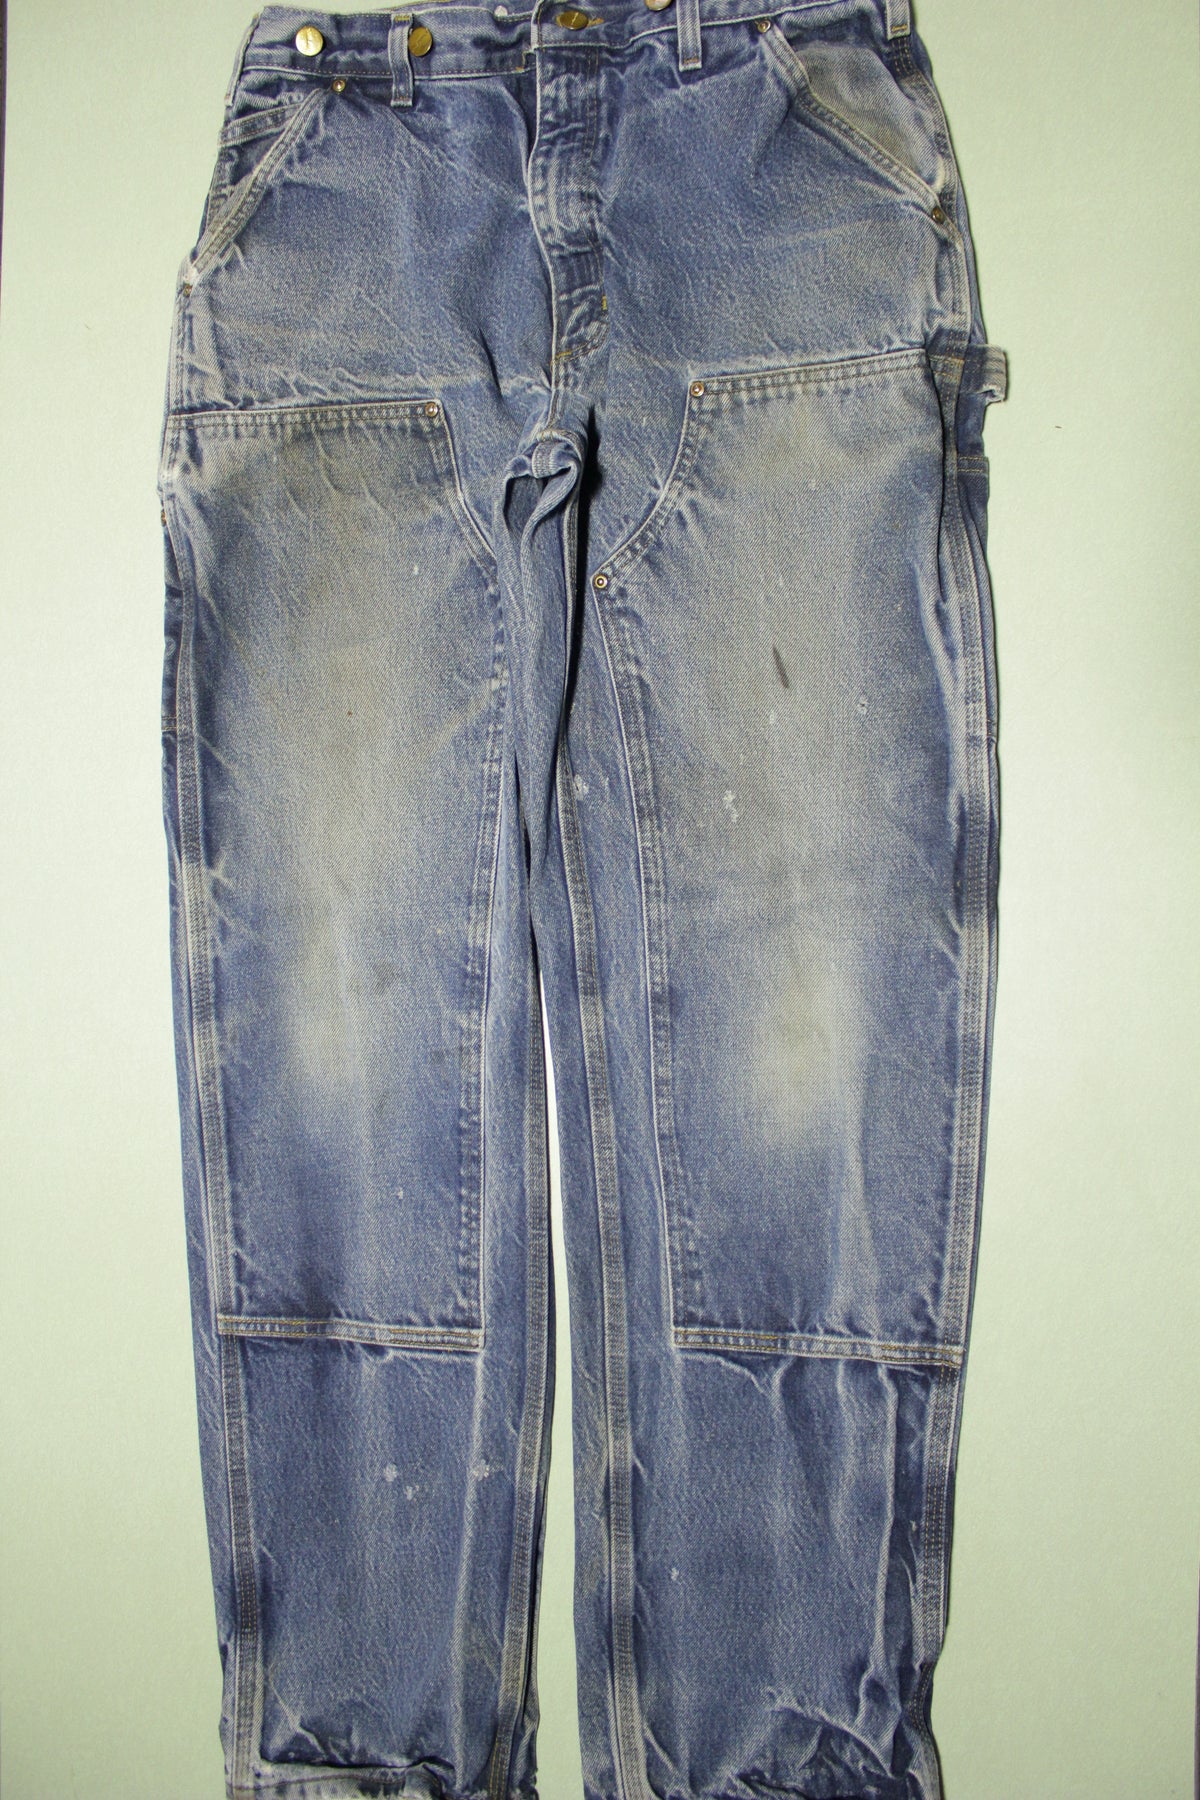 Carhartt B07 DNM Double Knee Denim Jeans Blue Construction Work Pants